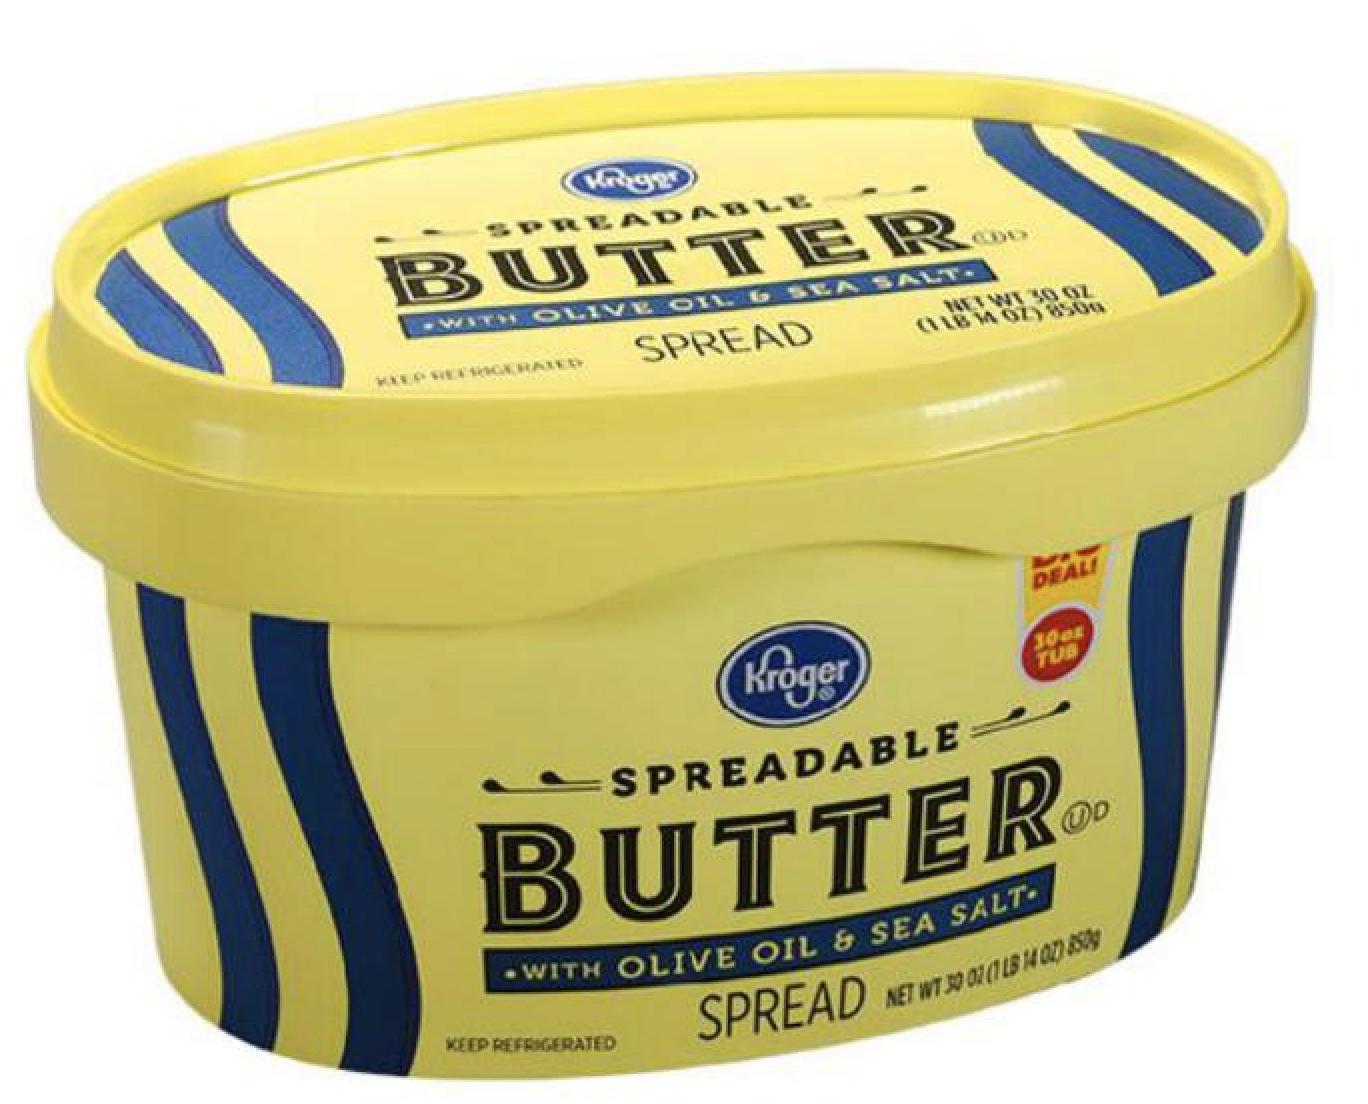 butter packaging material